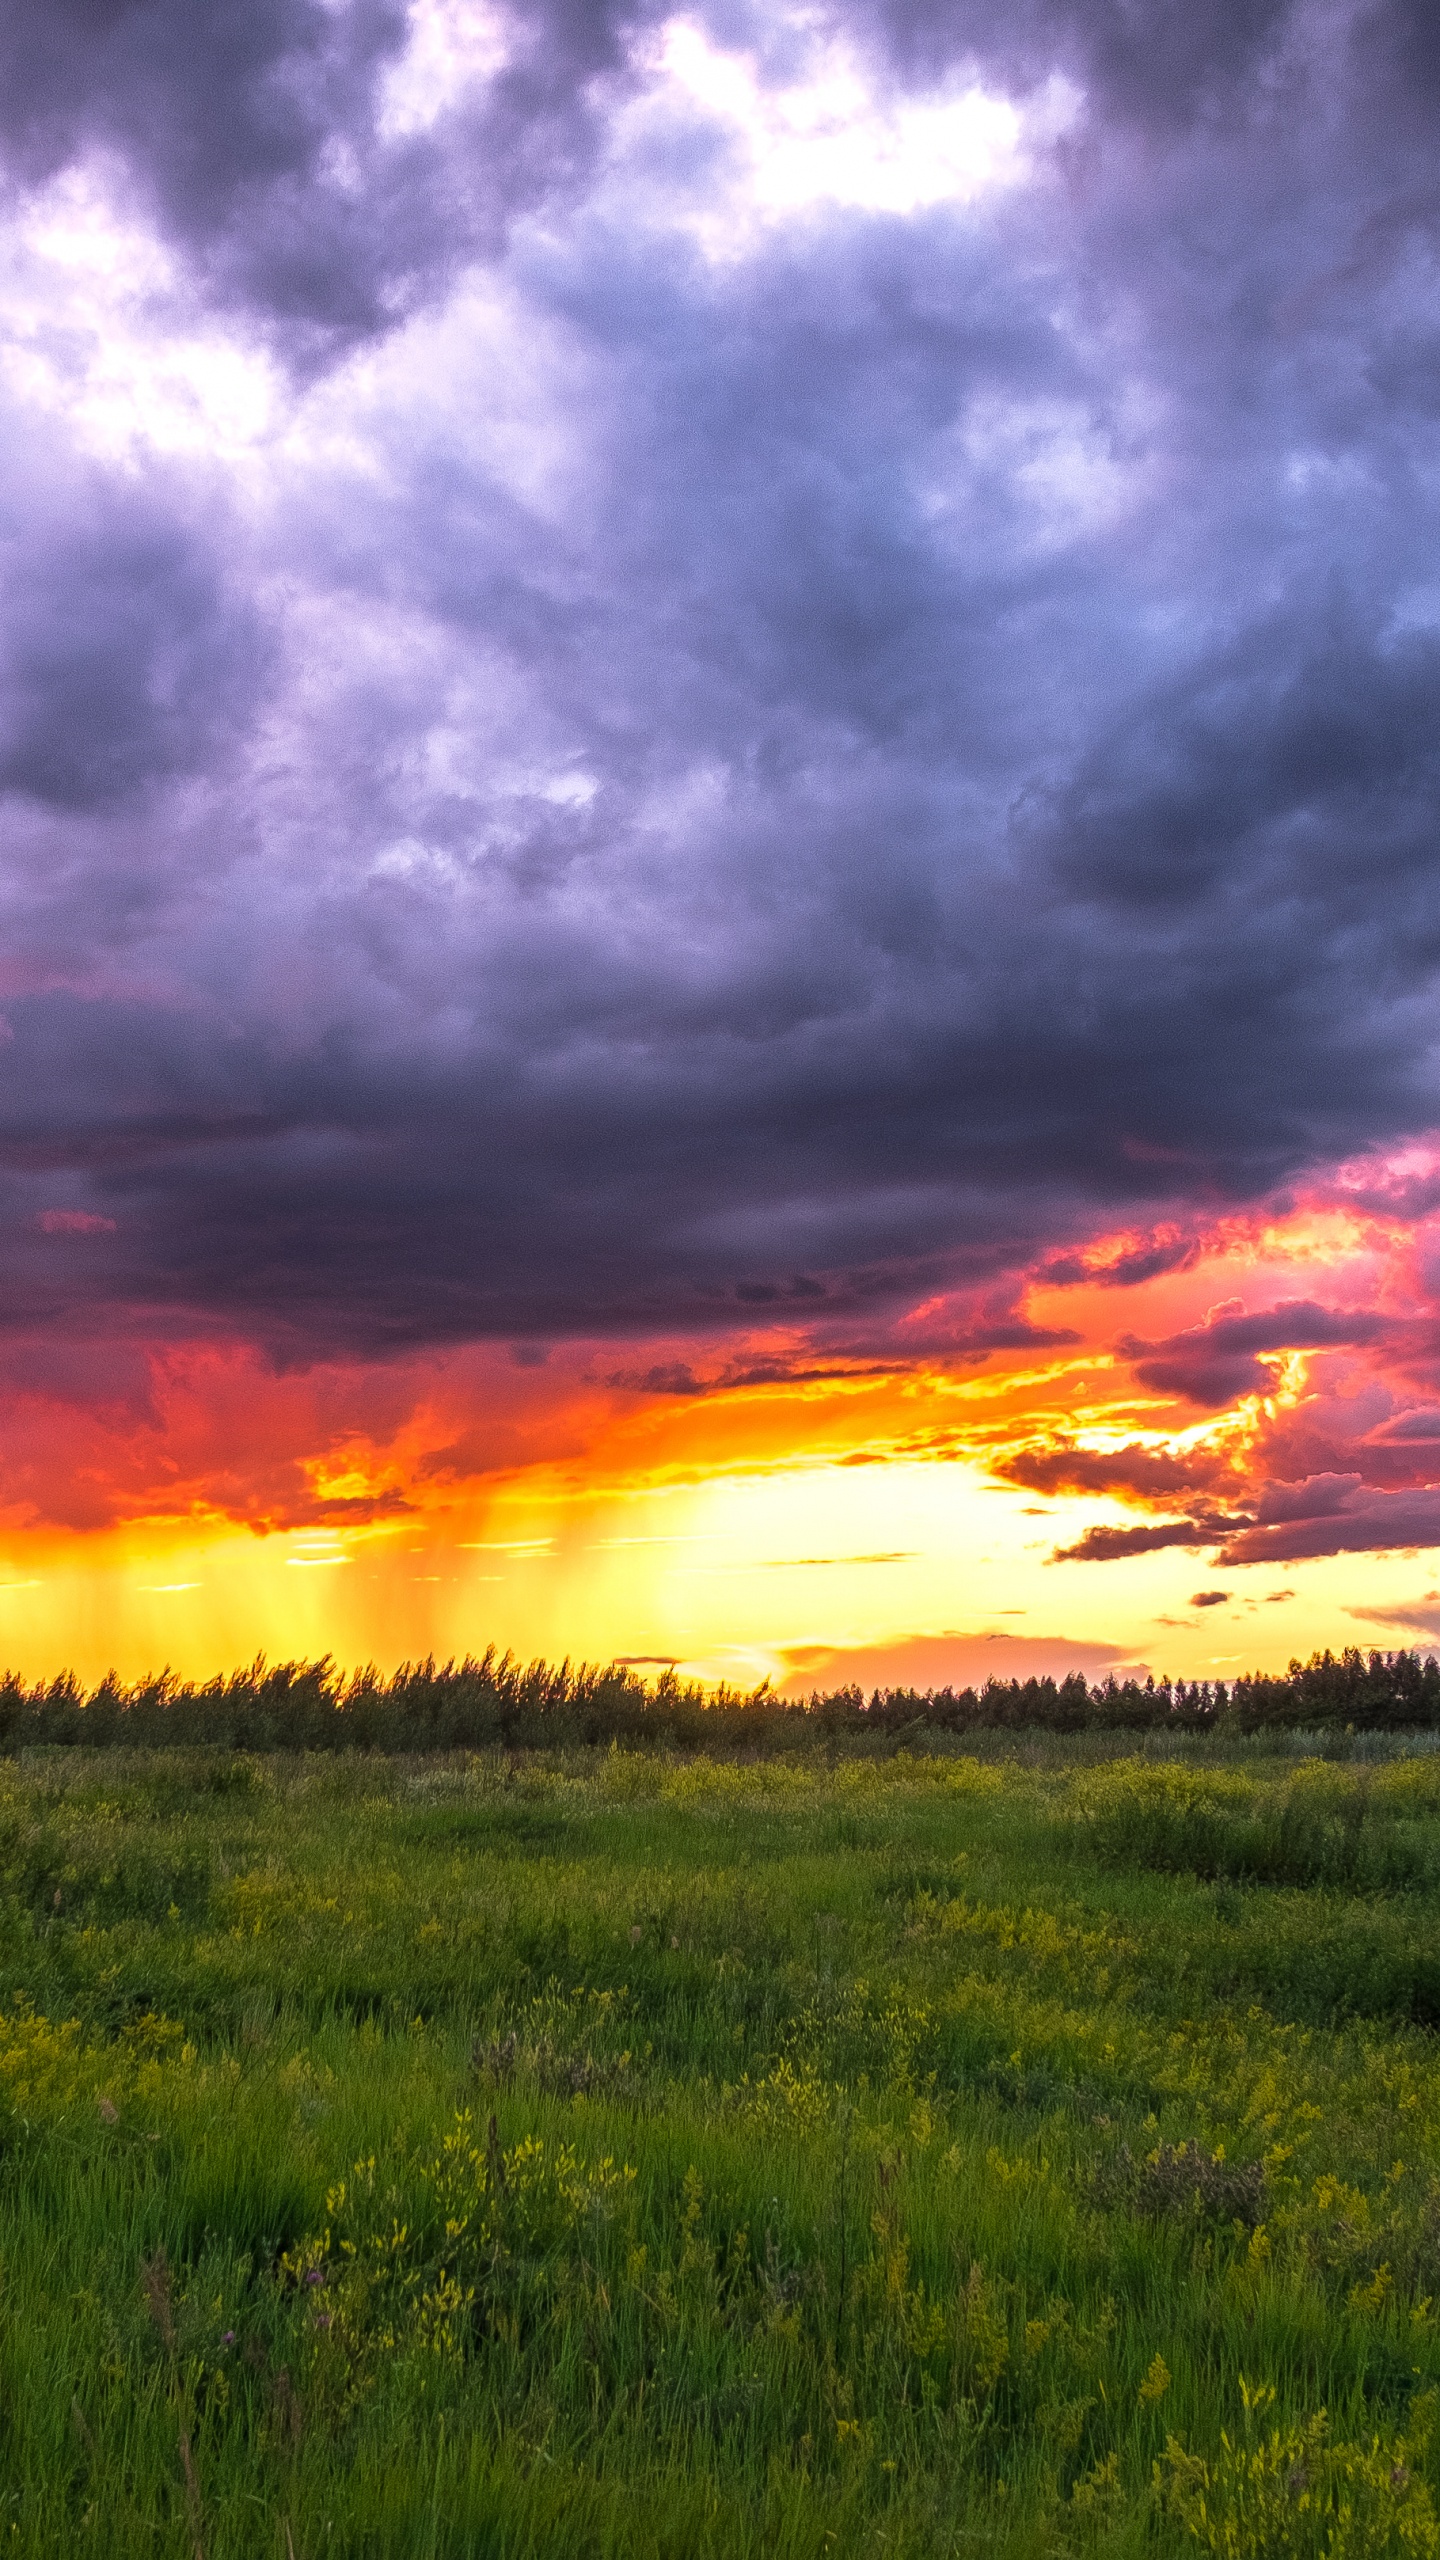 Green Grass Field Under Cloudy Sky During Sunset. Wallpaper in 1440x2560 Resolution